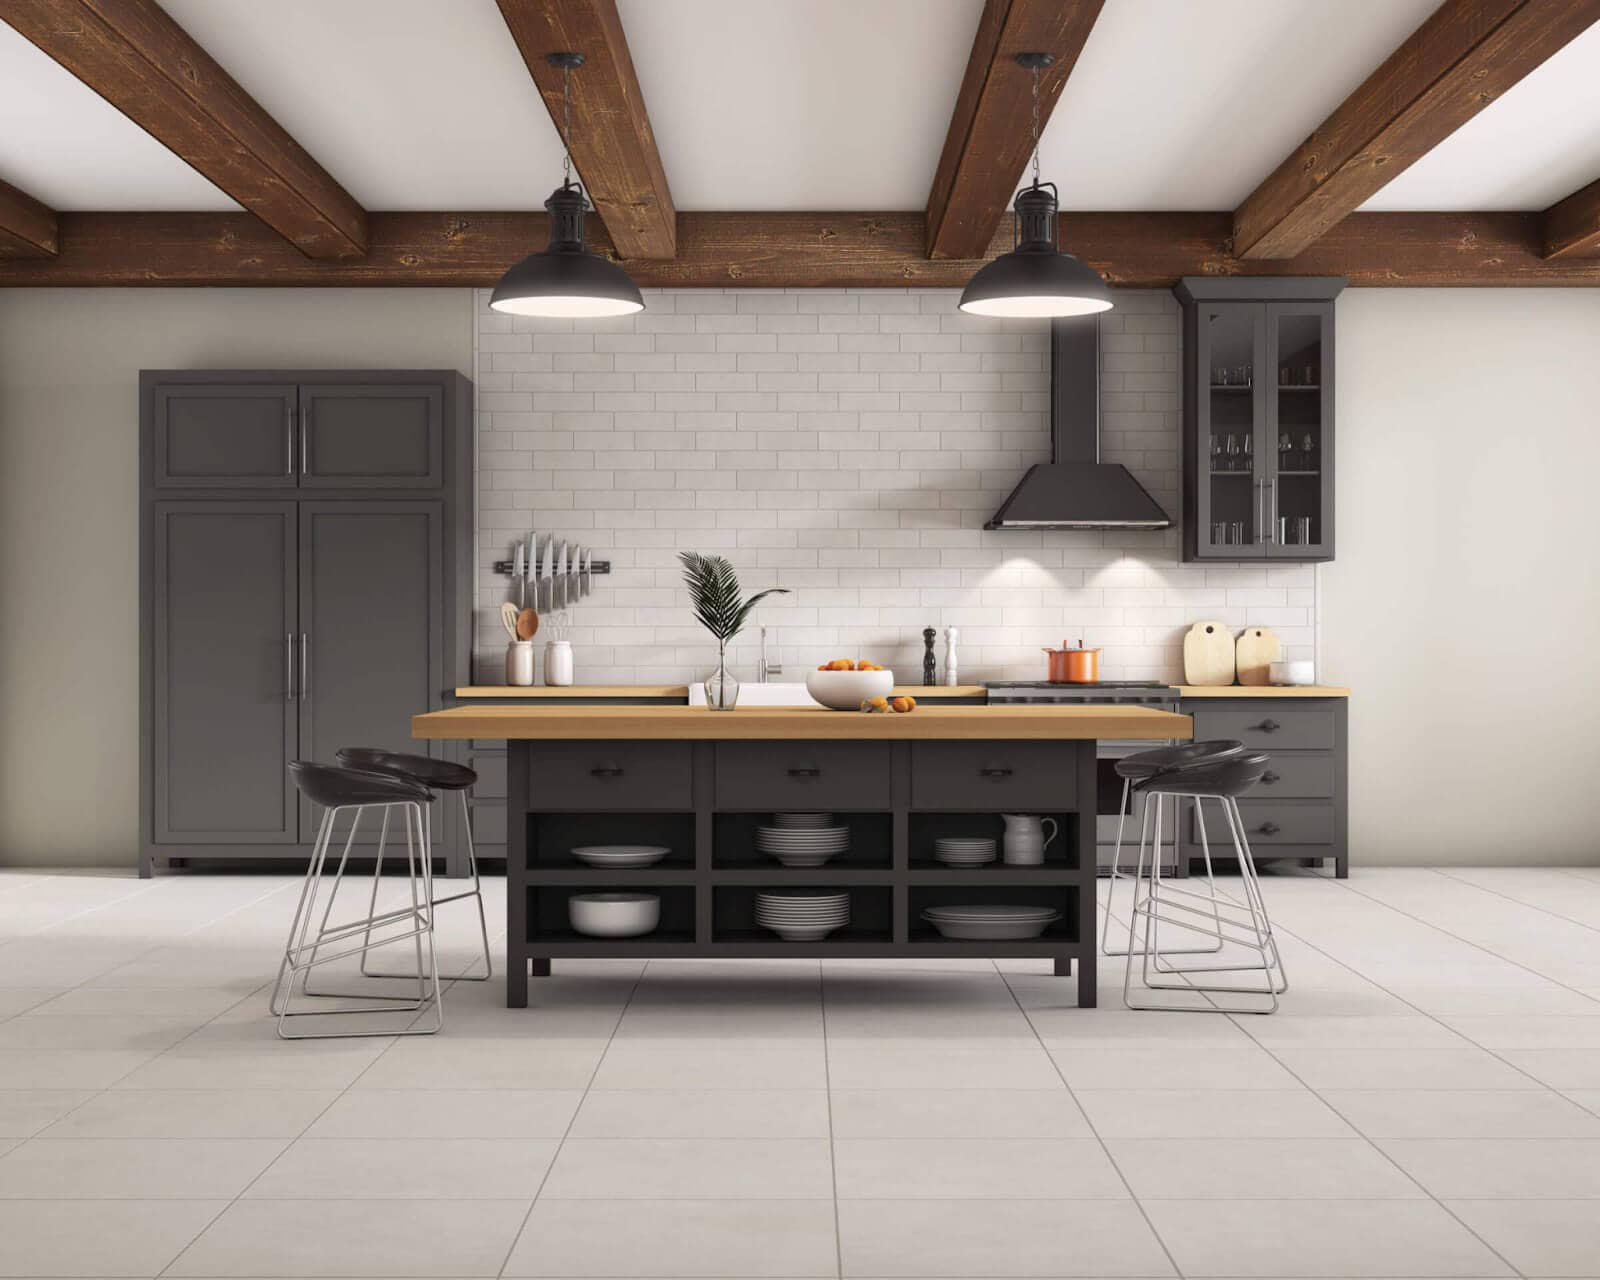 Kitchen with cream tile flooring and backsplash